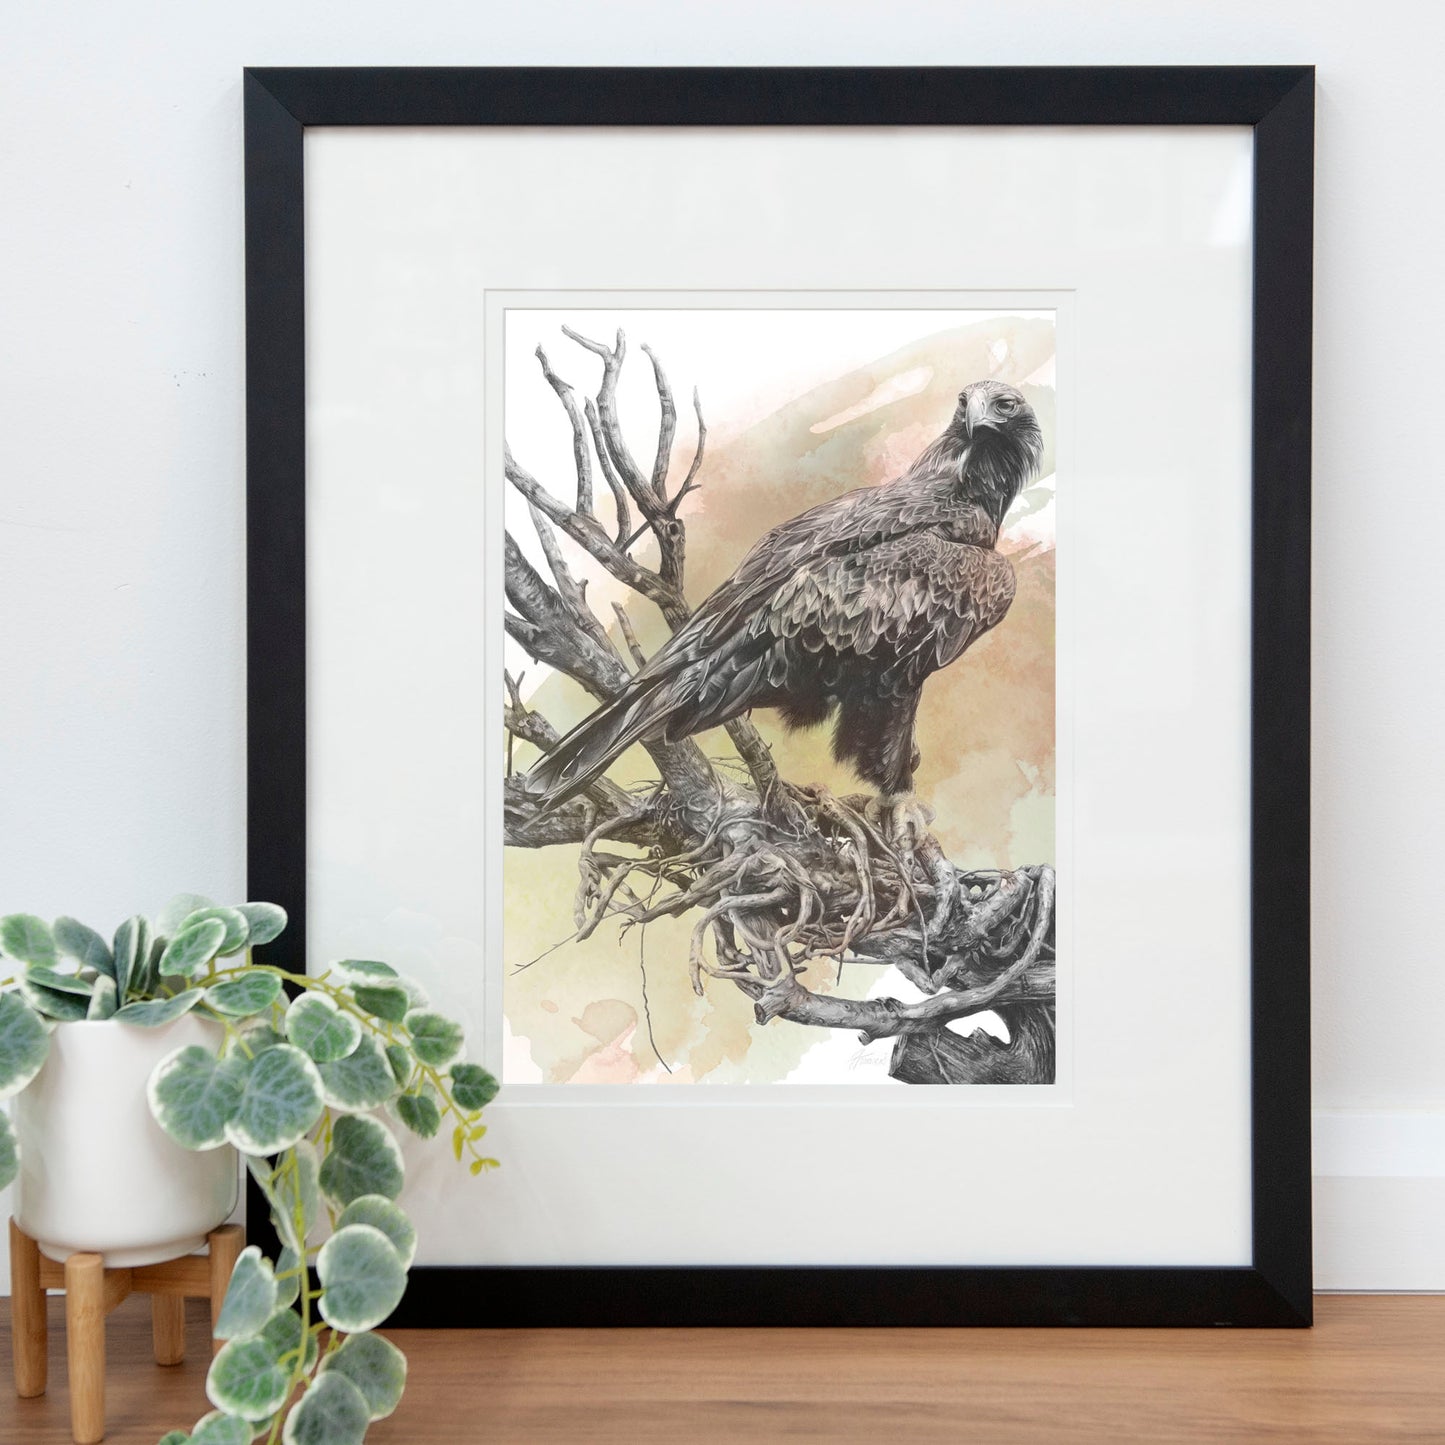 'Wedge-tailed Eagle Colour' art print